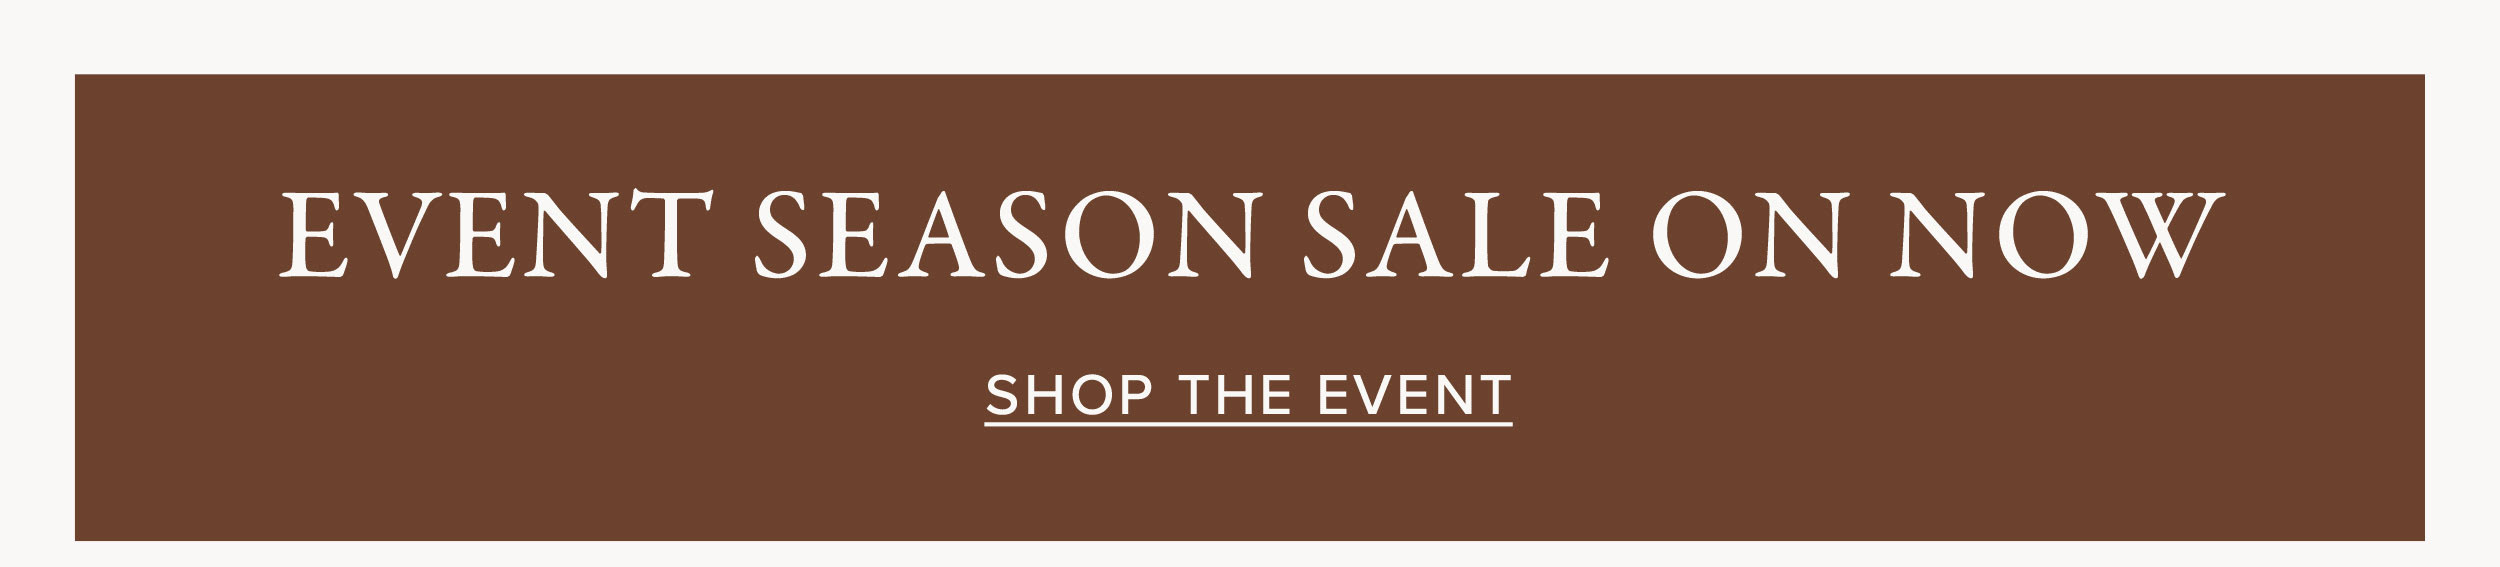 Event Season Sale On Now